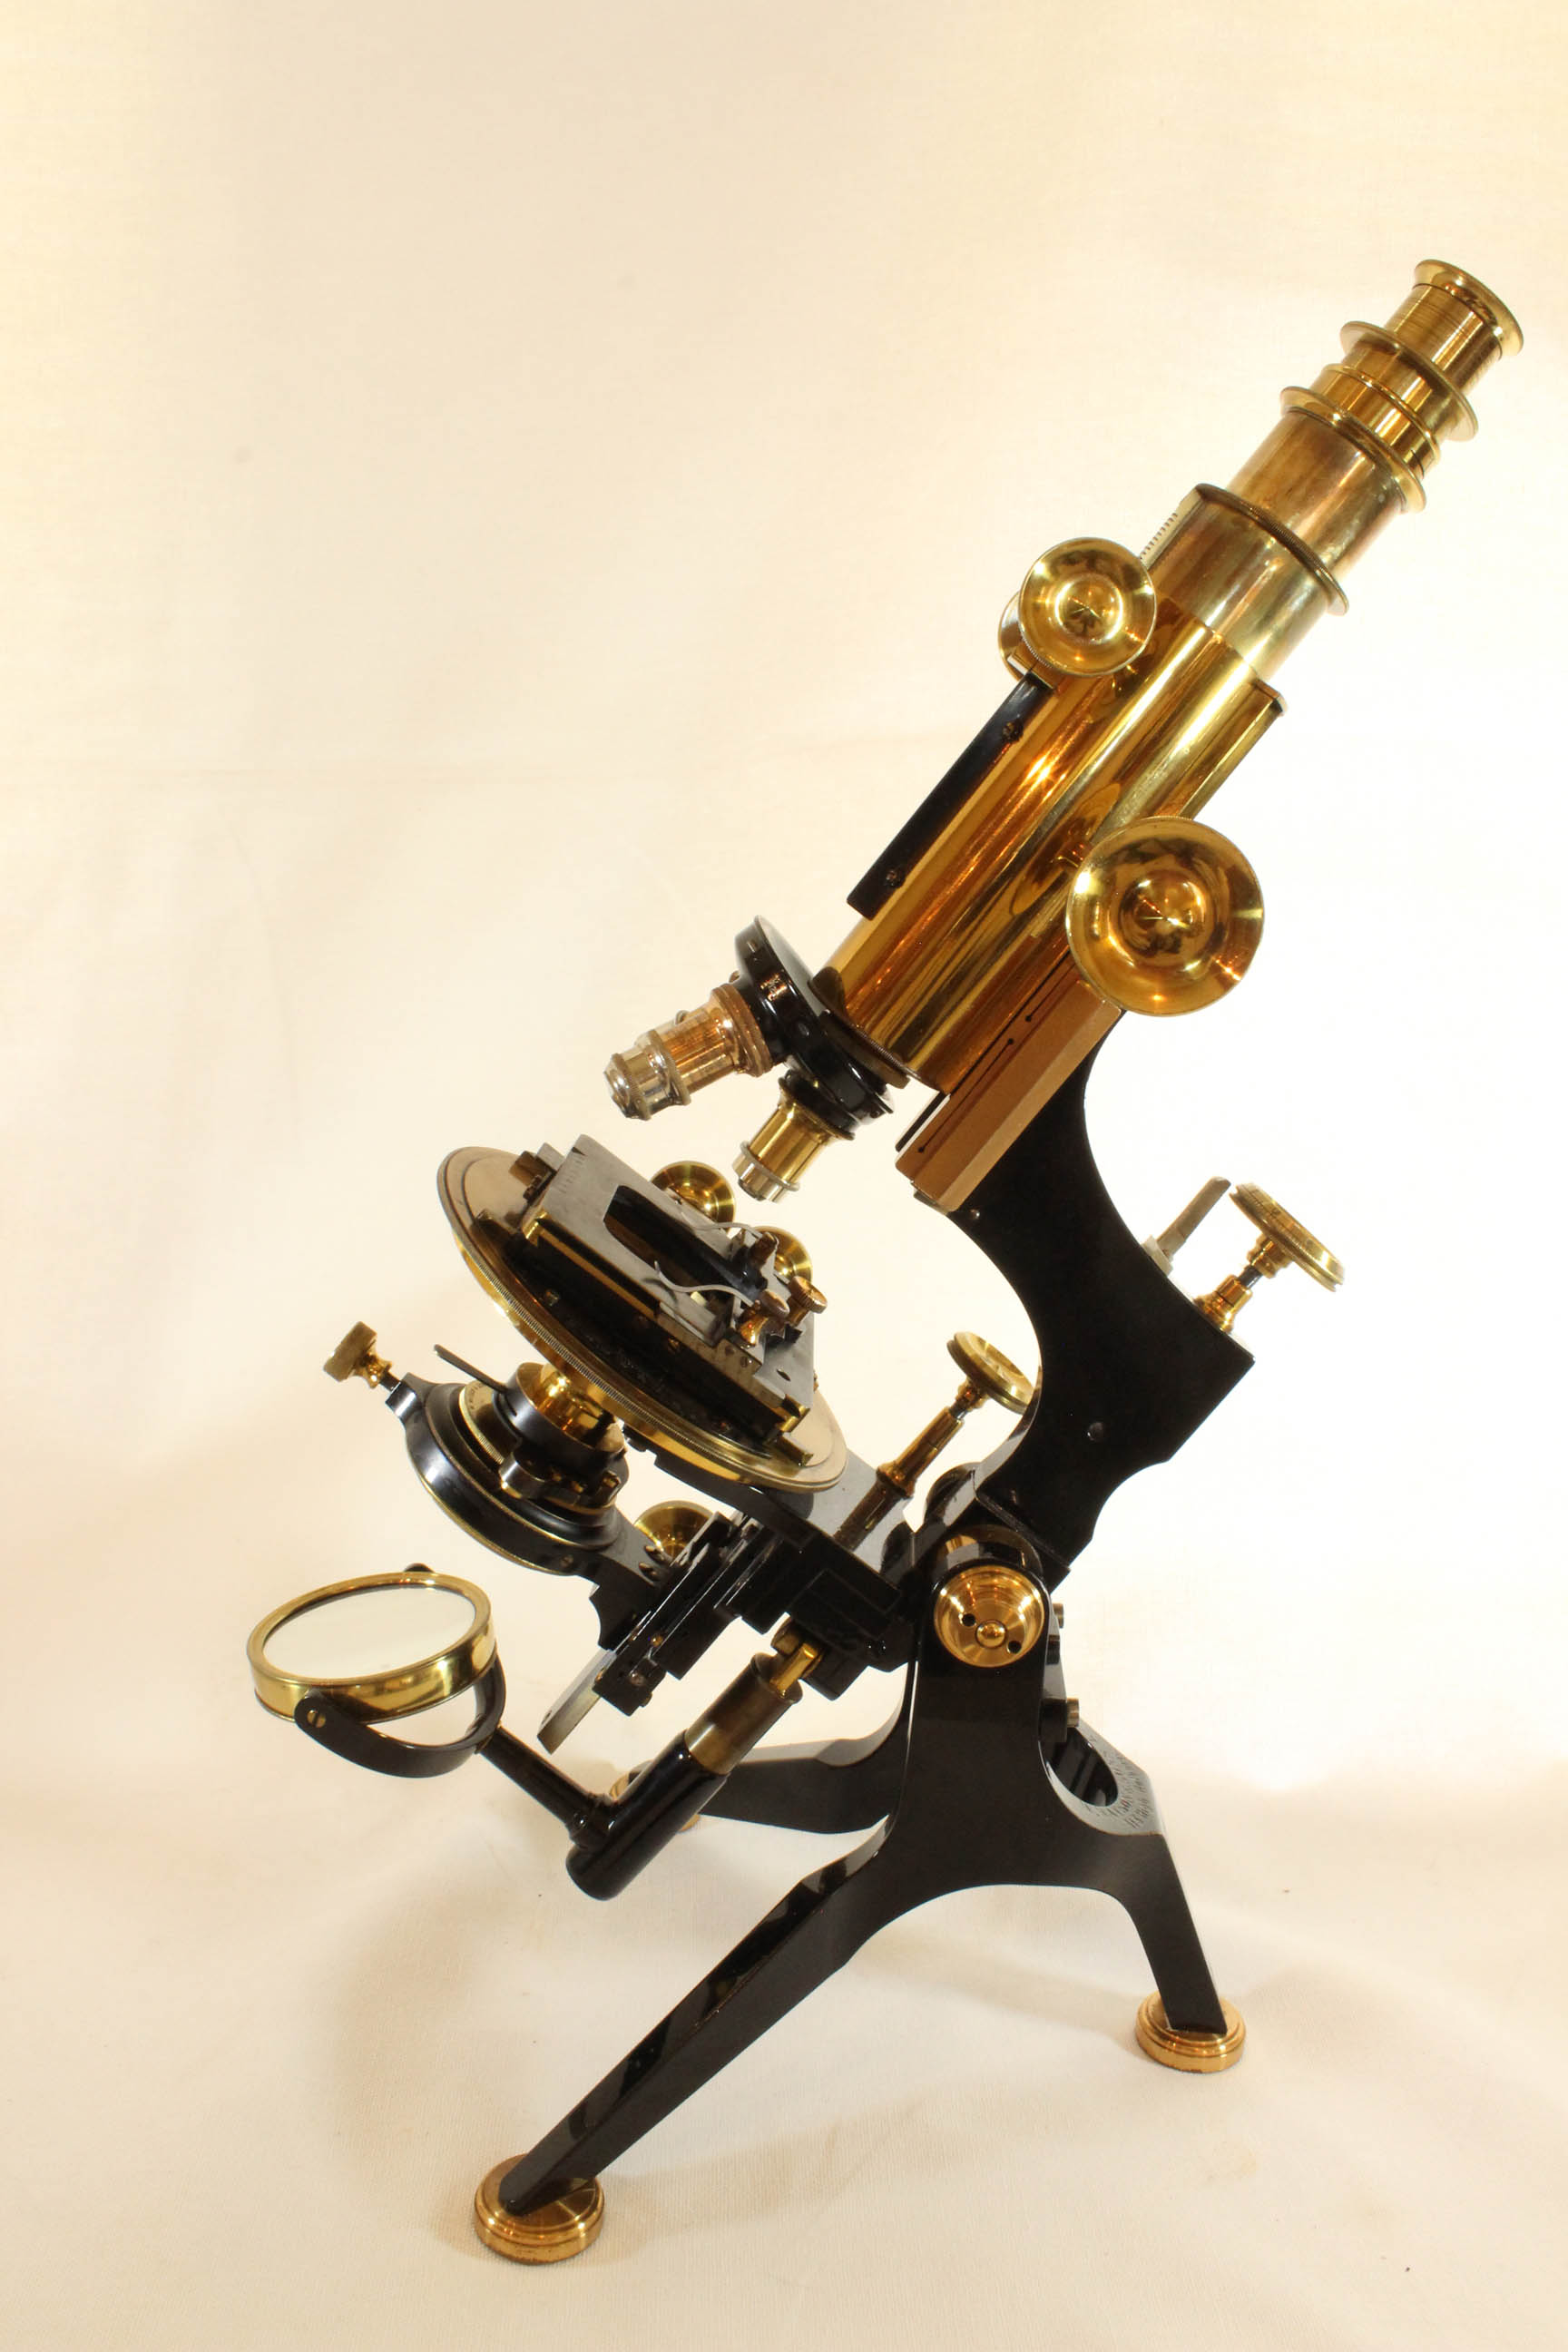 Circuit Stage Vn Heurck Microscope